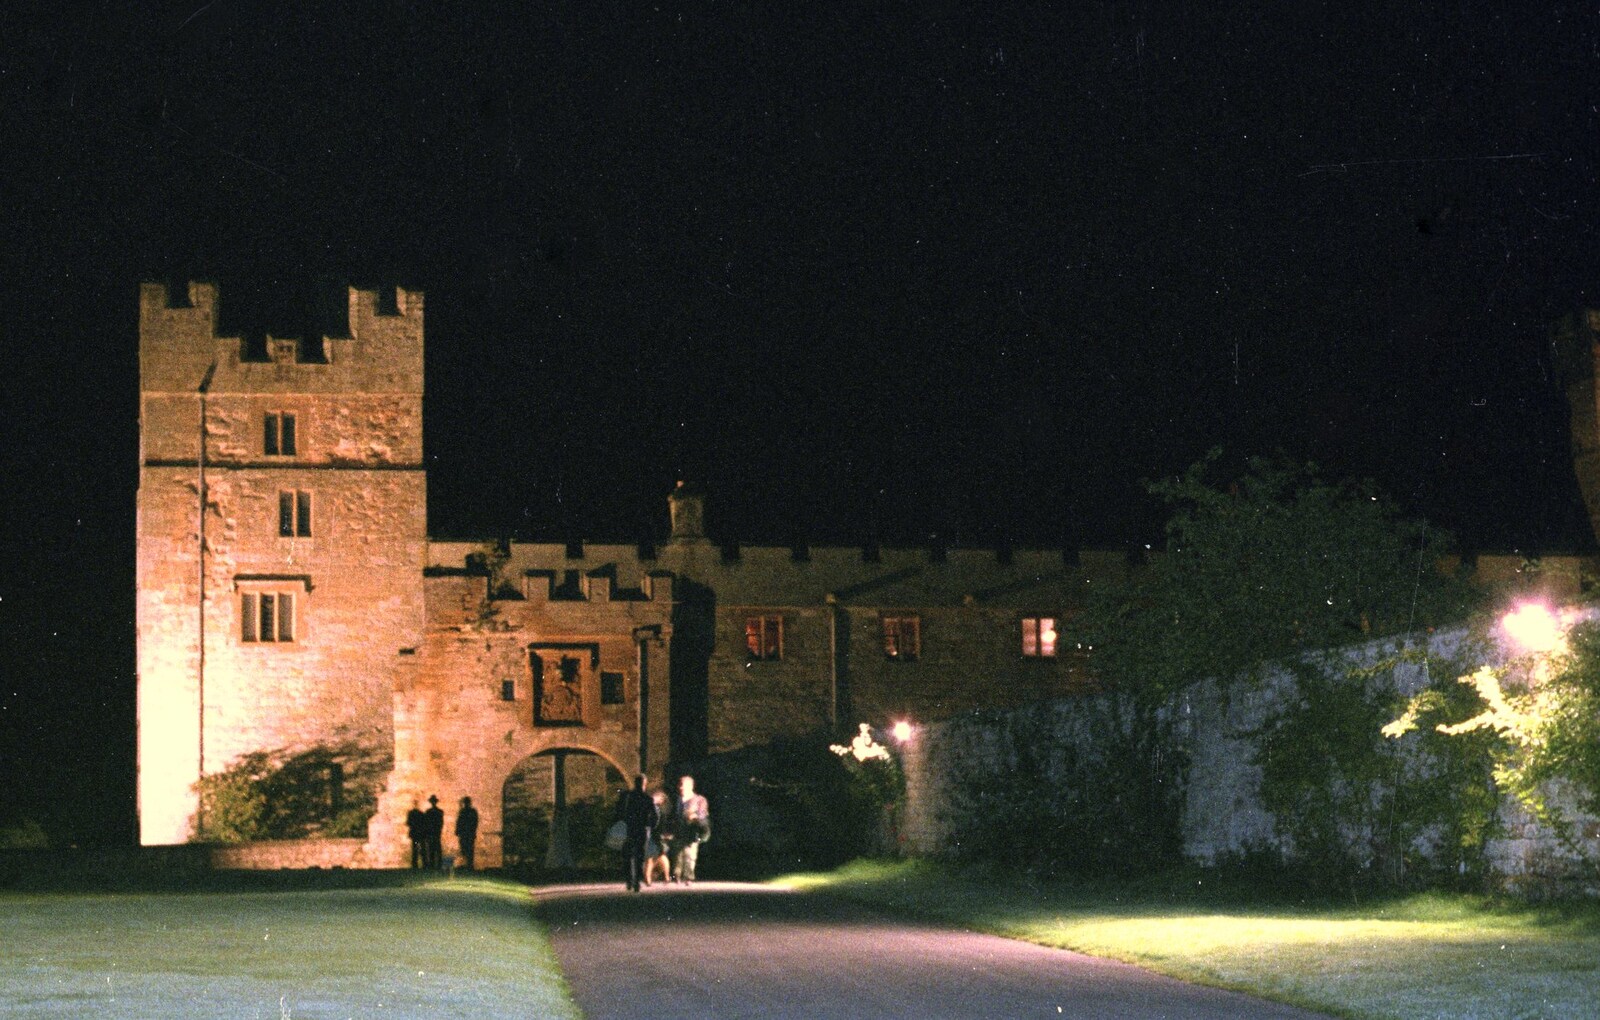 Stuart and Sarah's CISU Wedding, Naworth Castle, Brampton, Cumbria - 21st September 1996: Naworth castle at night